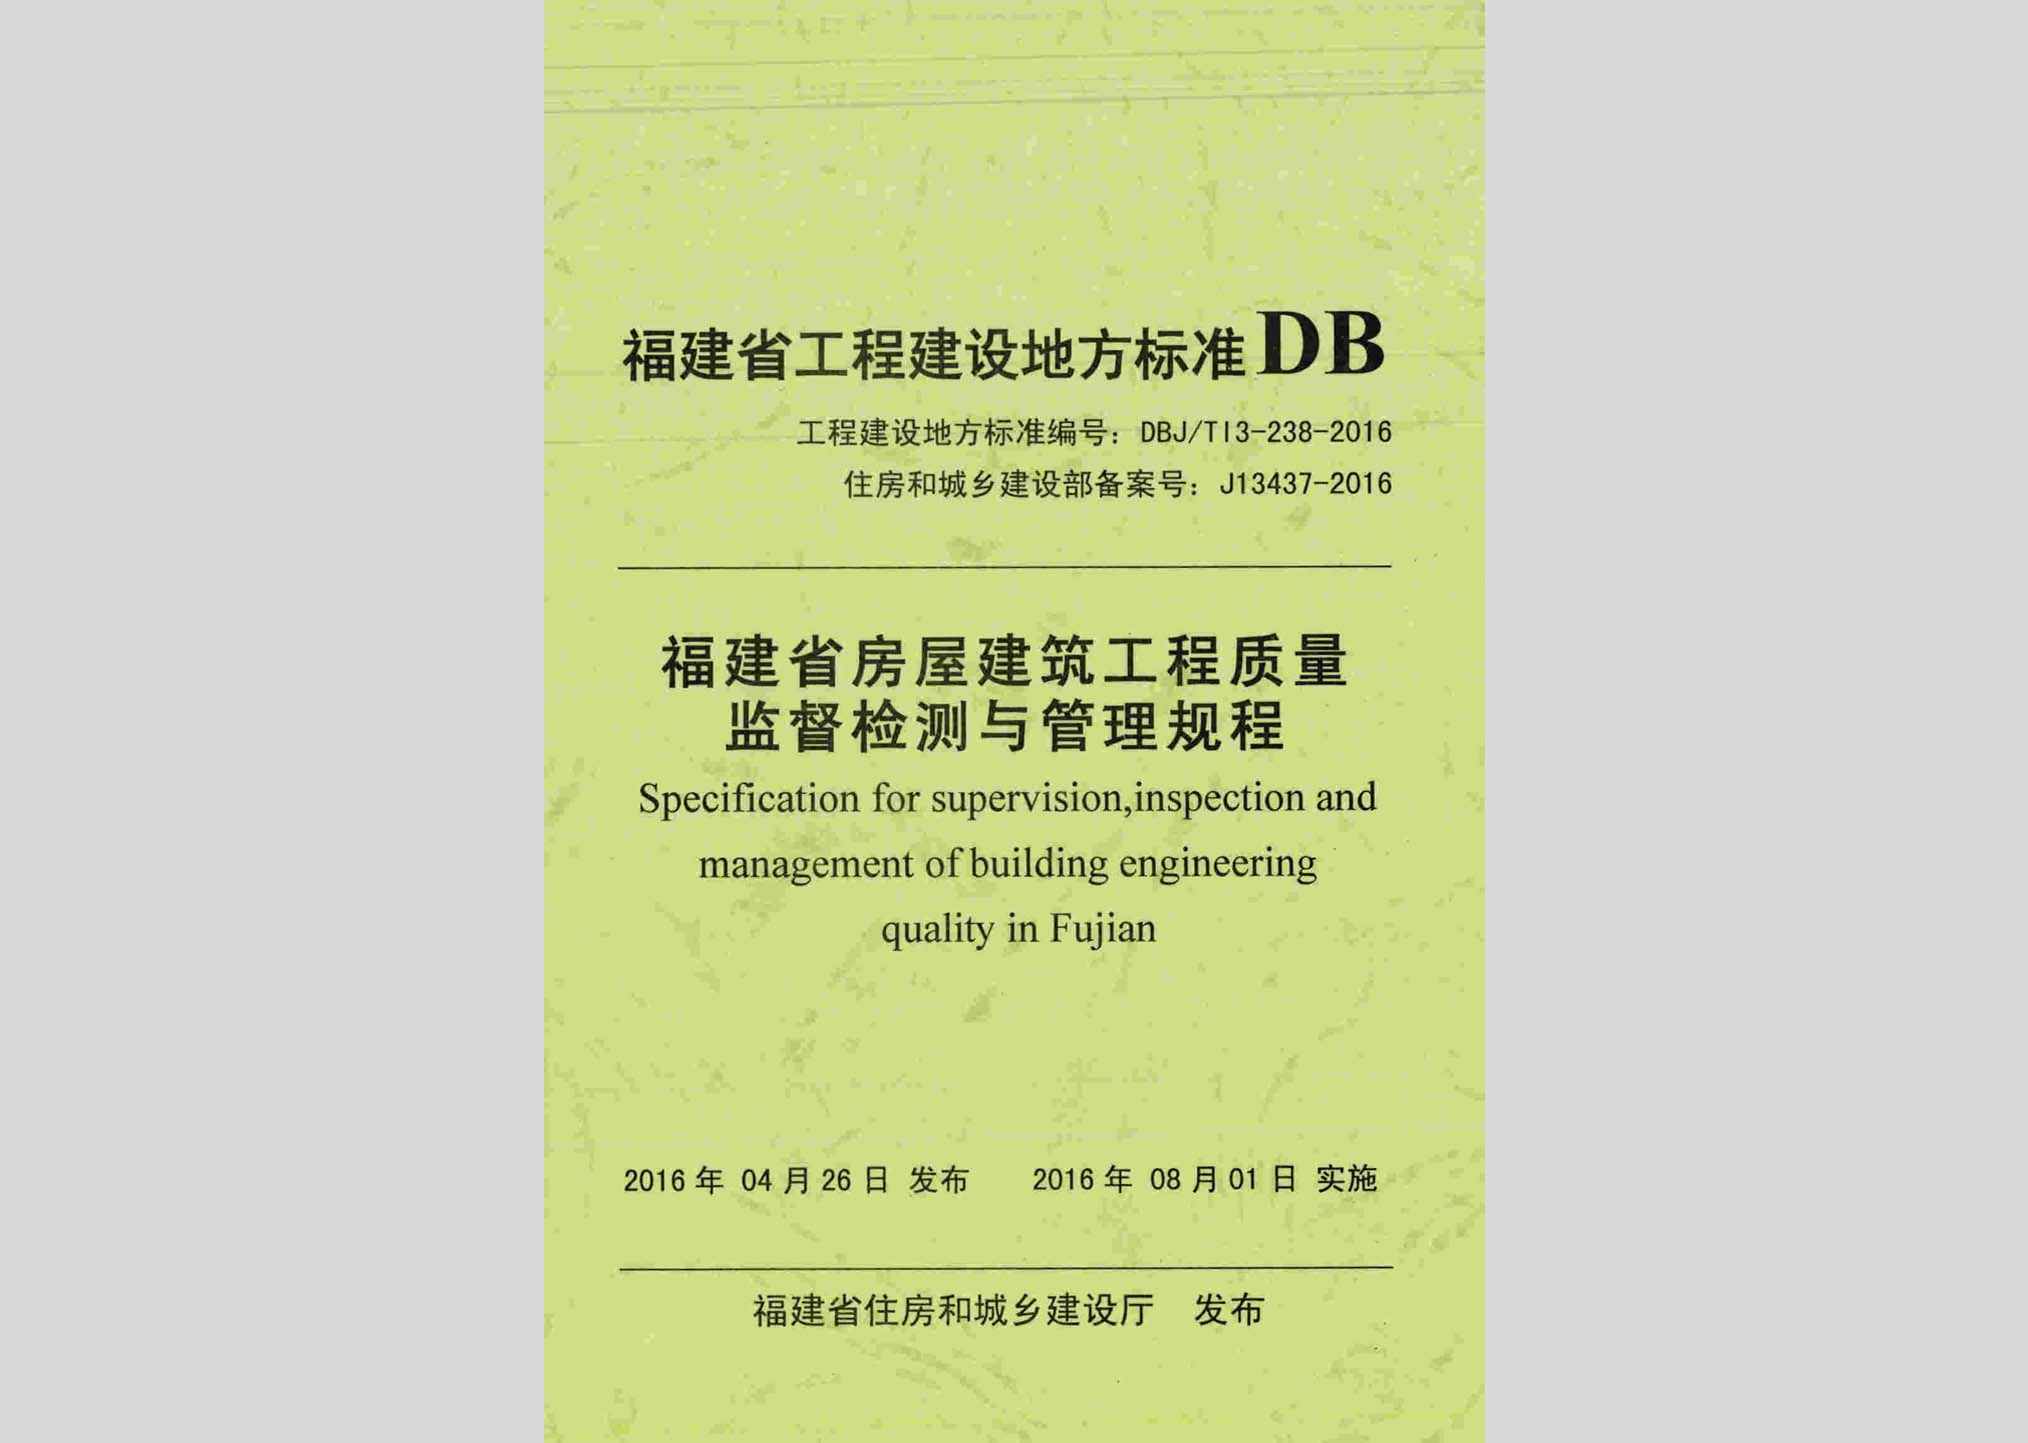 DBJ/T13-238-2016：福建省房屋建筑工程质量监督检测与管理规程